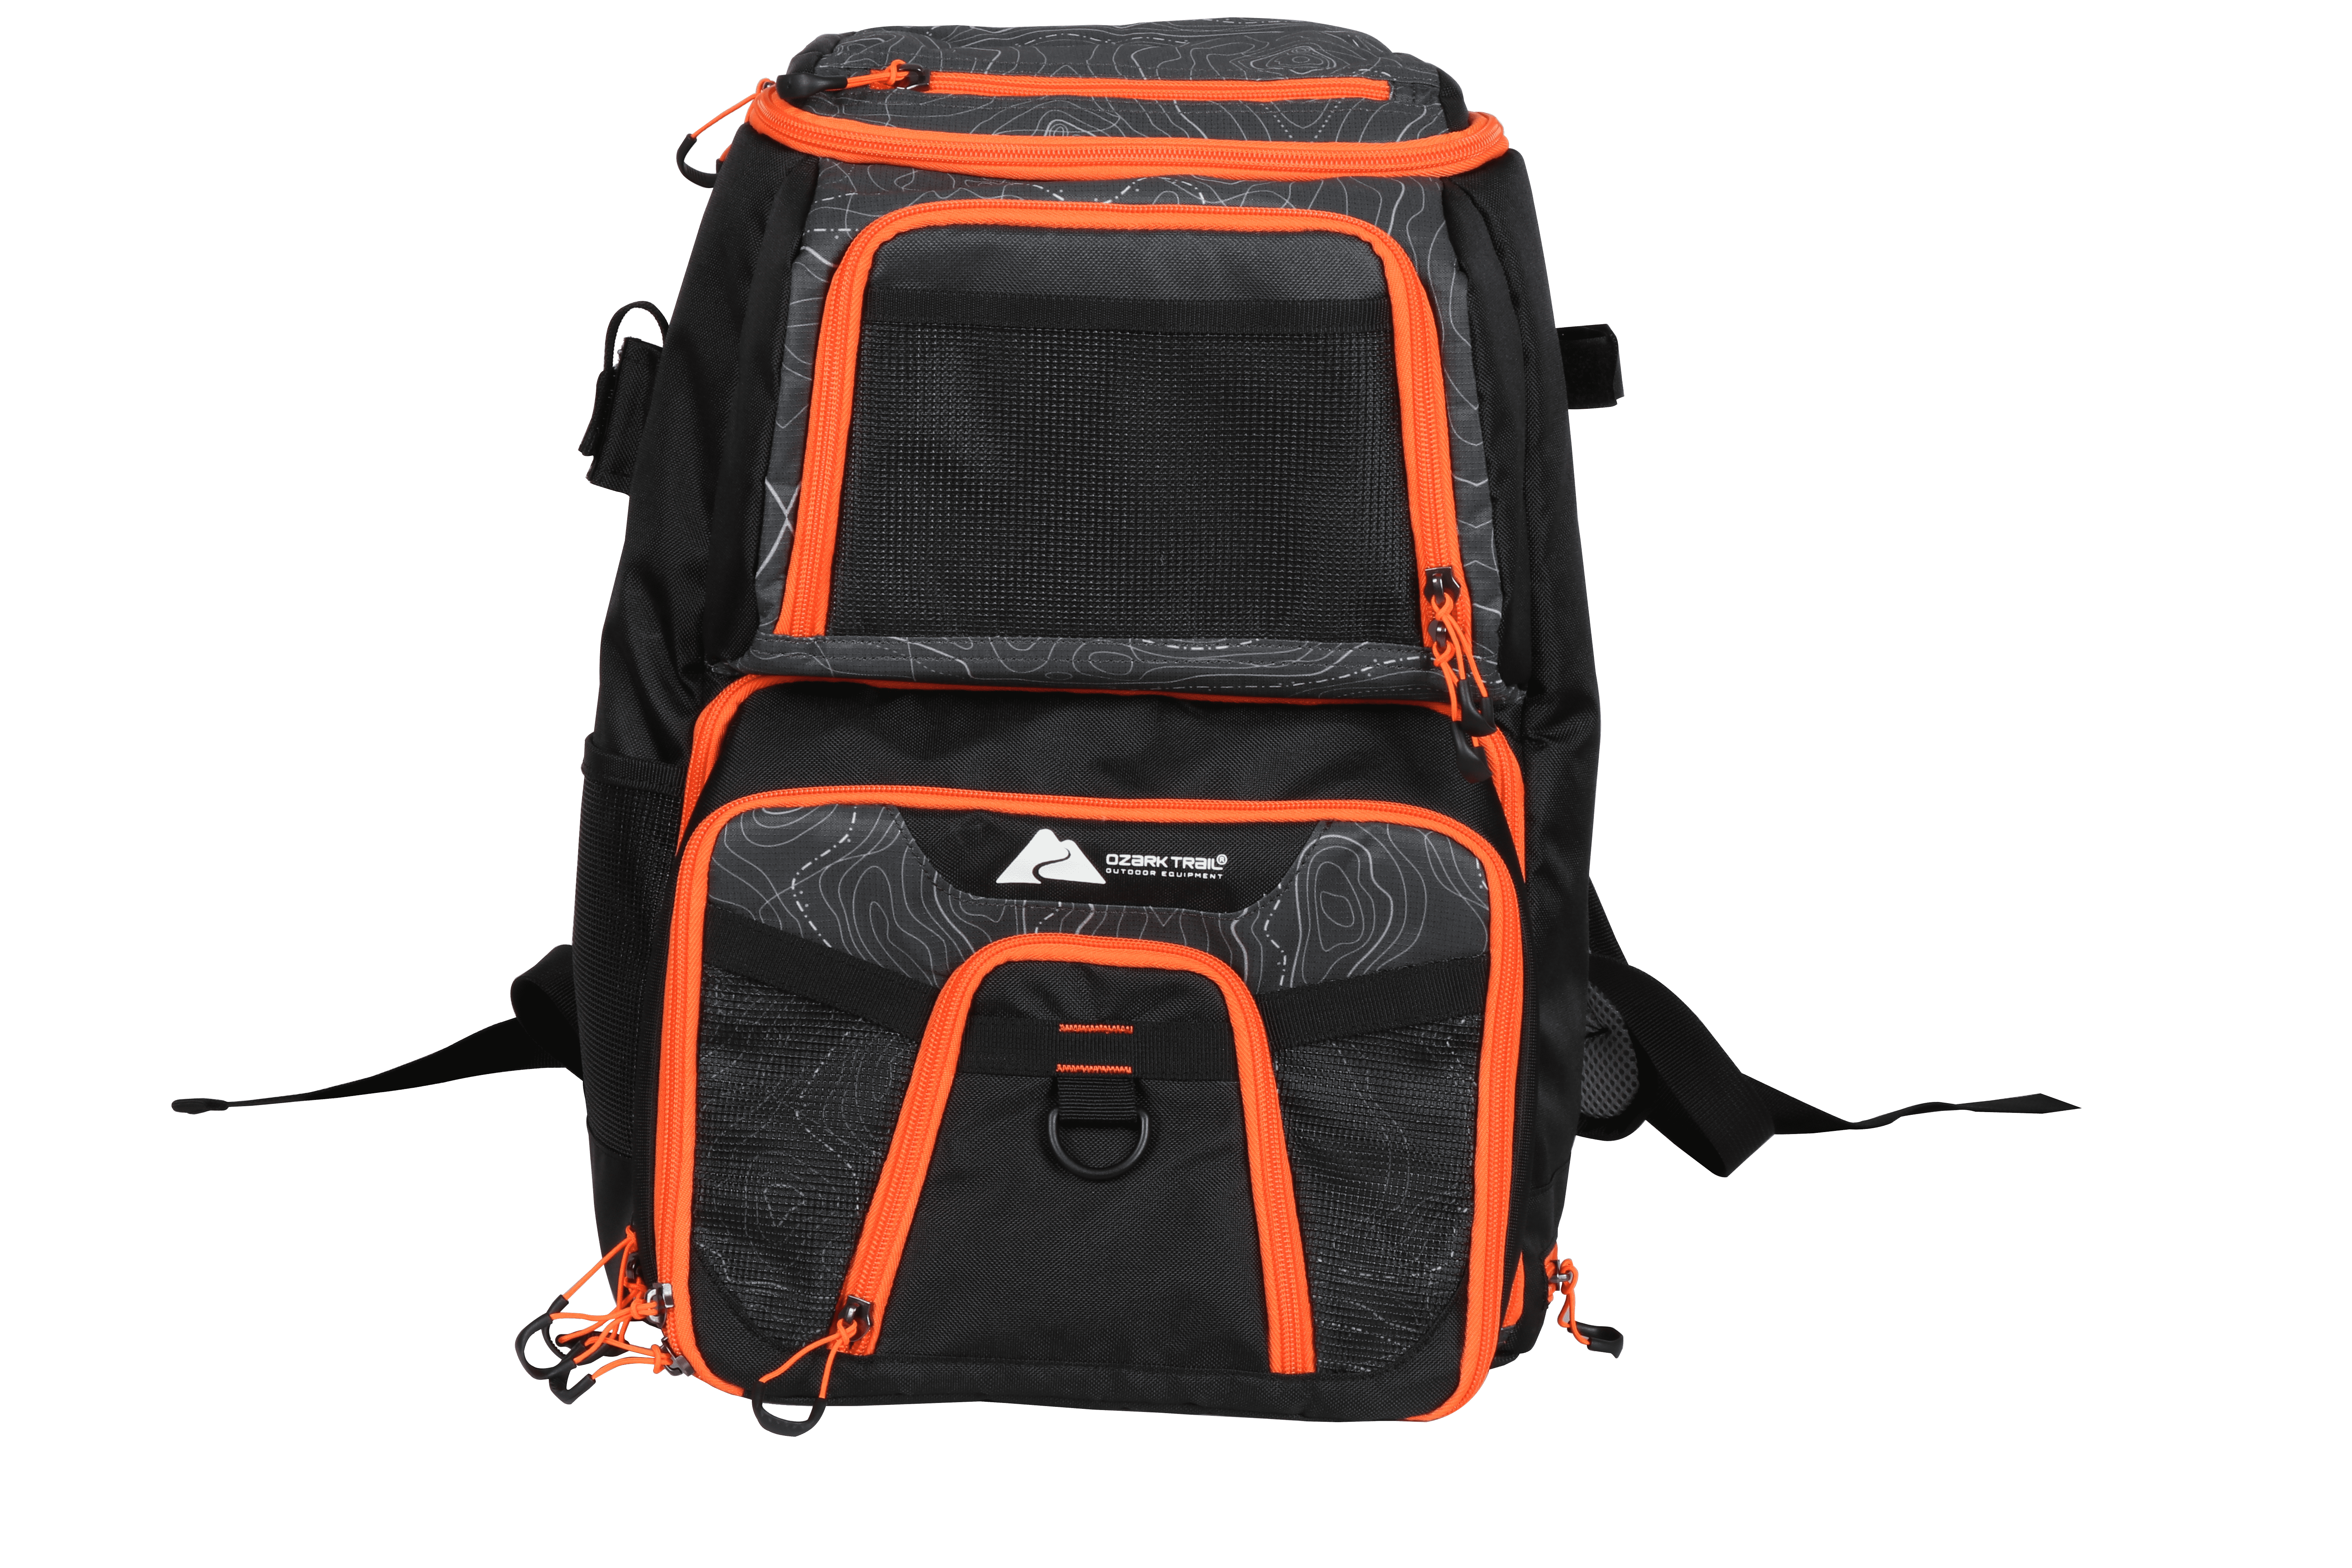 Biscuit Update span Ozark Trail Elite Fishing Tackle Backpack with Bait Cooler, Black -  Walmart.com